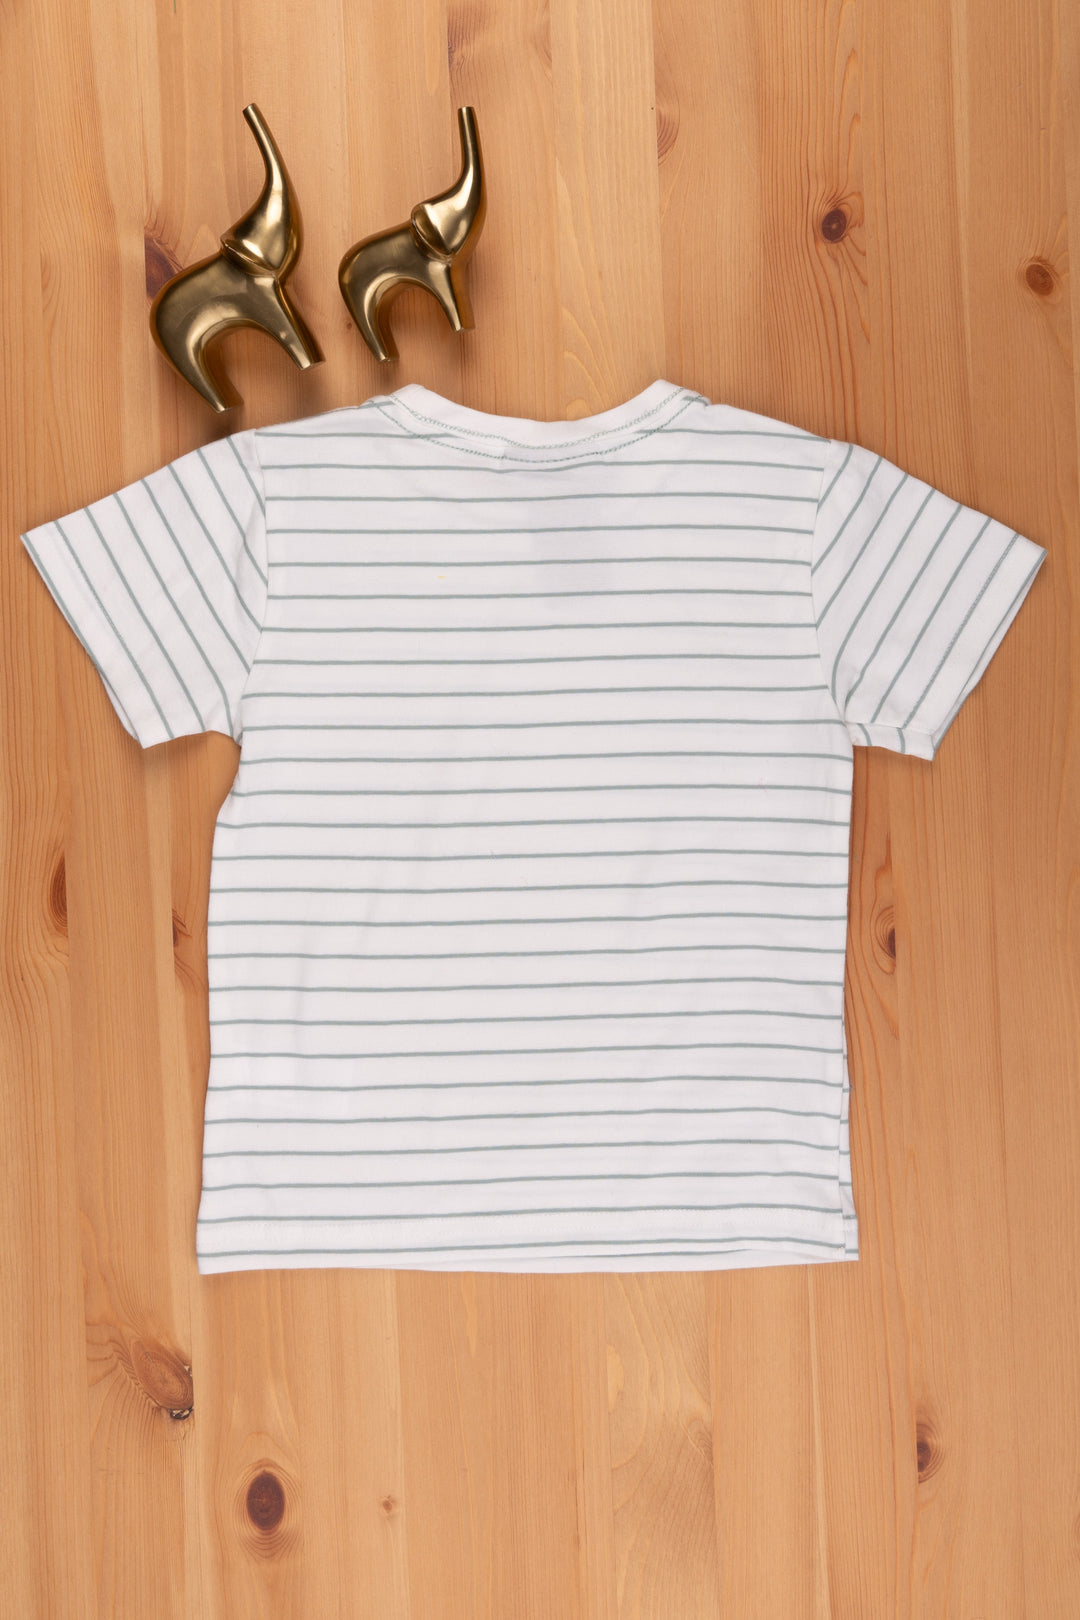 The Nesavu Boys T Shirt Kids Unisex T-Shirt Fun Prints and Designs for Every Personality psr silks Nesavu